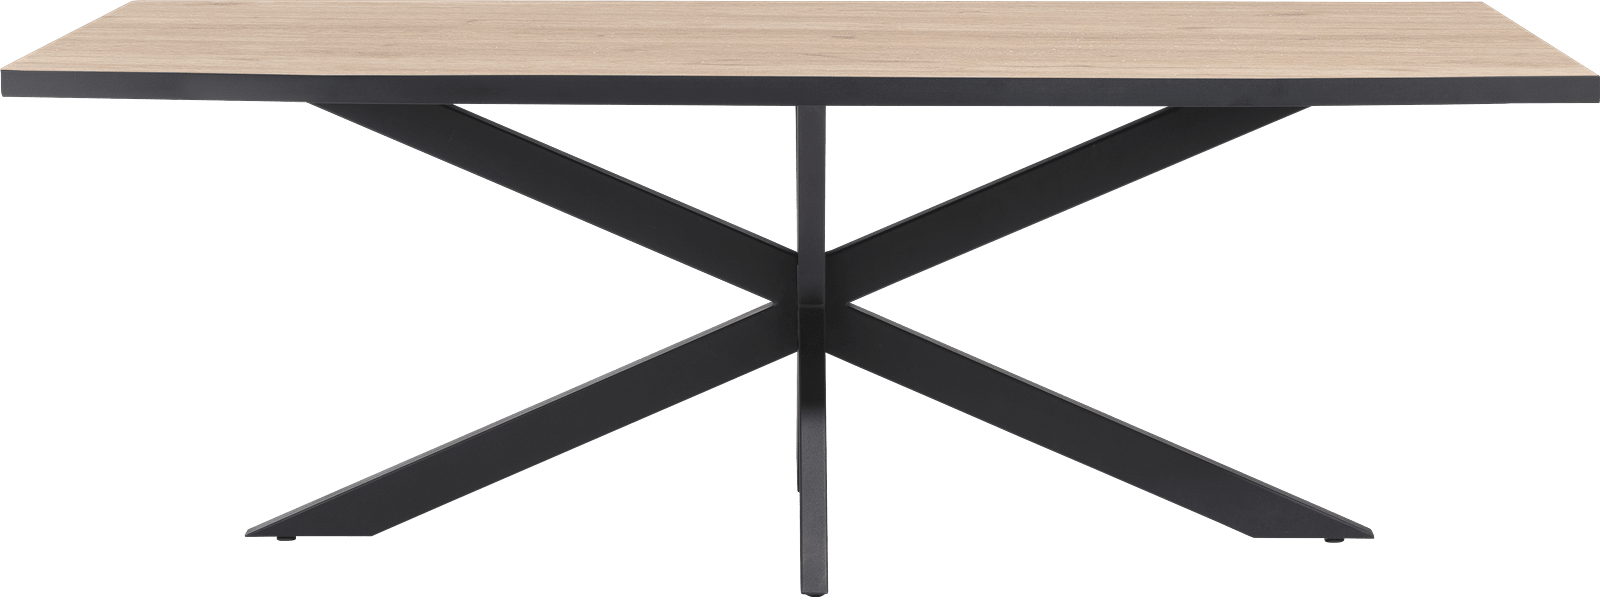 H&H - Avalox - Industriel - table 200 x 98 cm